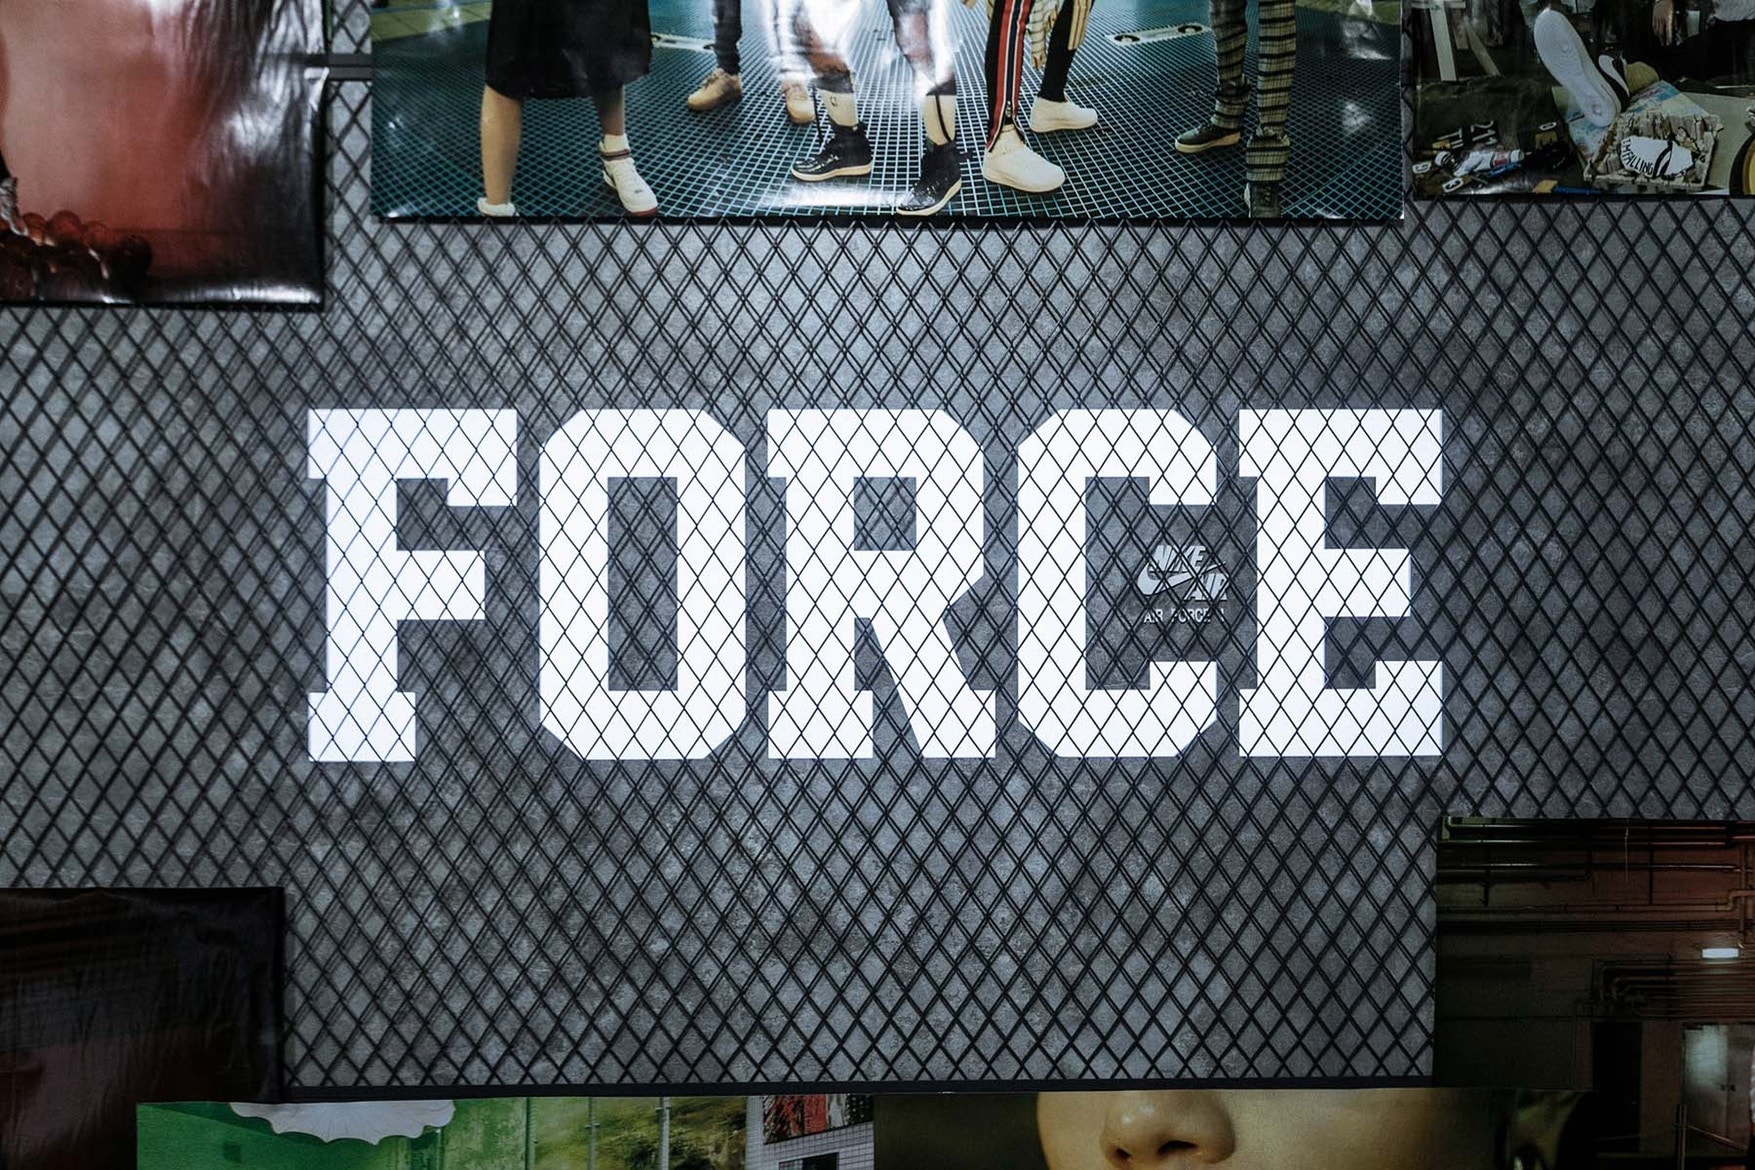 HBX 나이키 에어 포스 아크로님 트래비스 스콧 로커펠러 돈 Don C AF100 Air Force Nike 팝업 pop up Hong Kong Acronym Travis Scott Roc a Fella 홍콩서 개최 2017